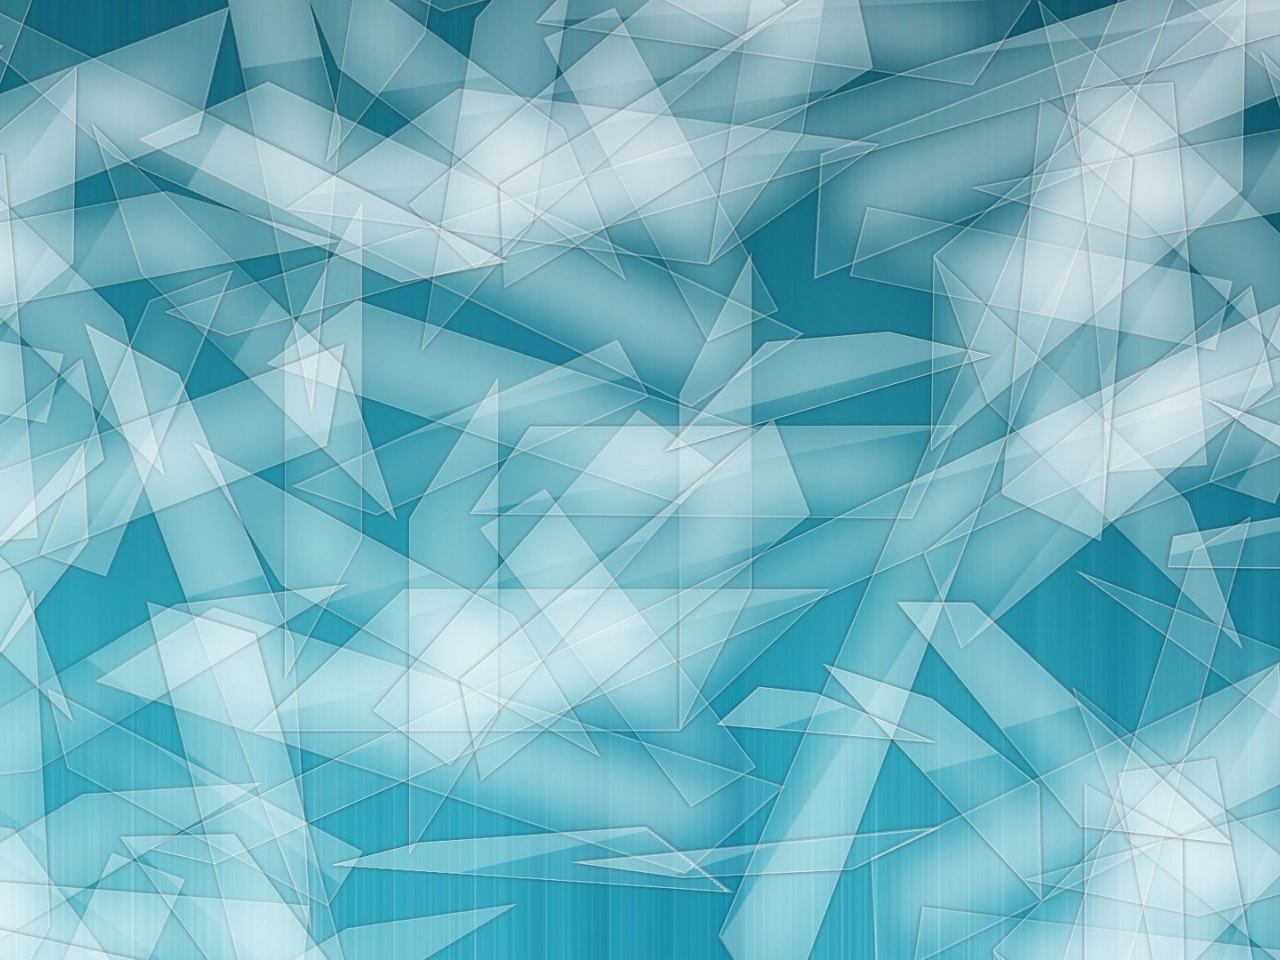 Glass Shards On Blue Background Desktop Pc And Mac Wallpaper